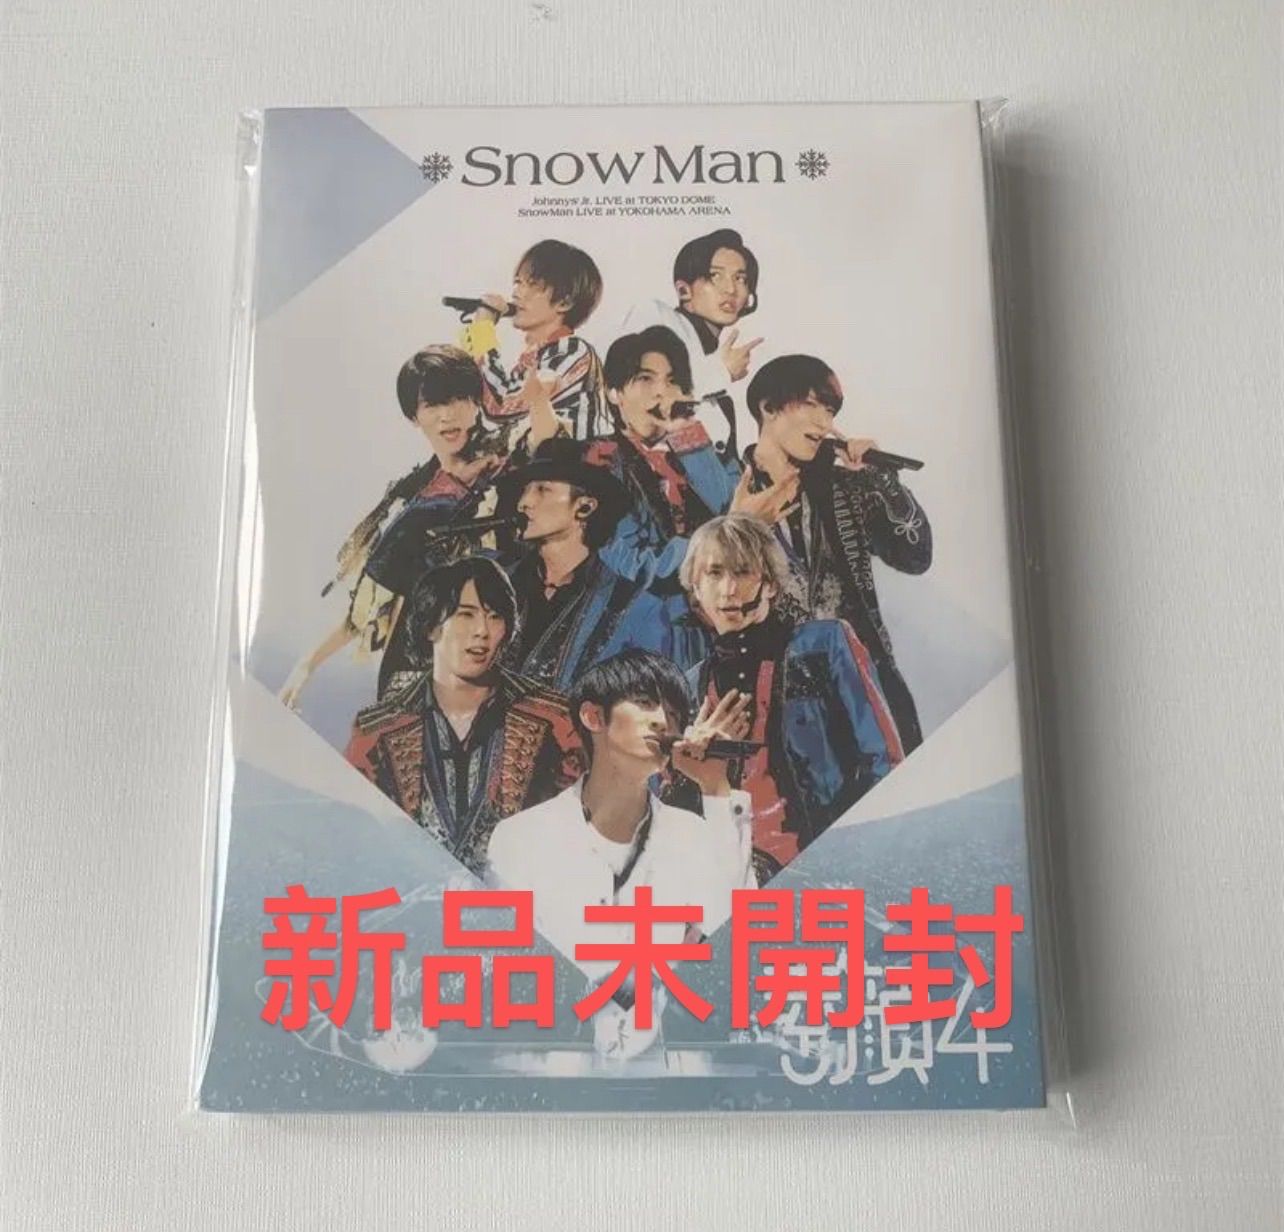 素顔4 SnowMan盤 DVD 買い人気 - miyomcerrahisi.com